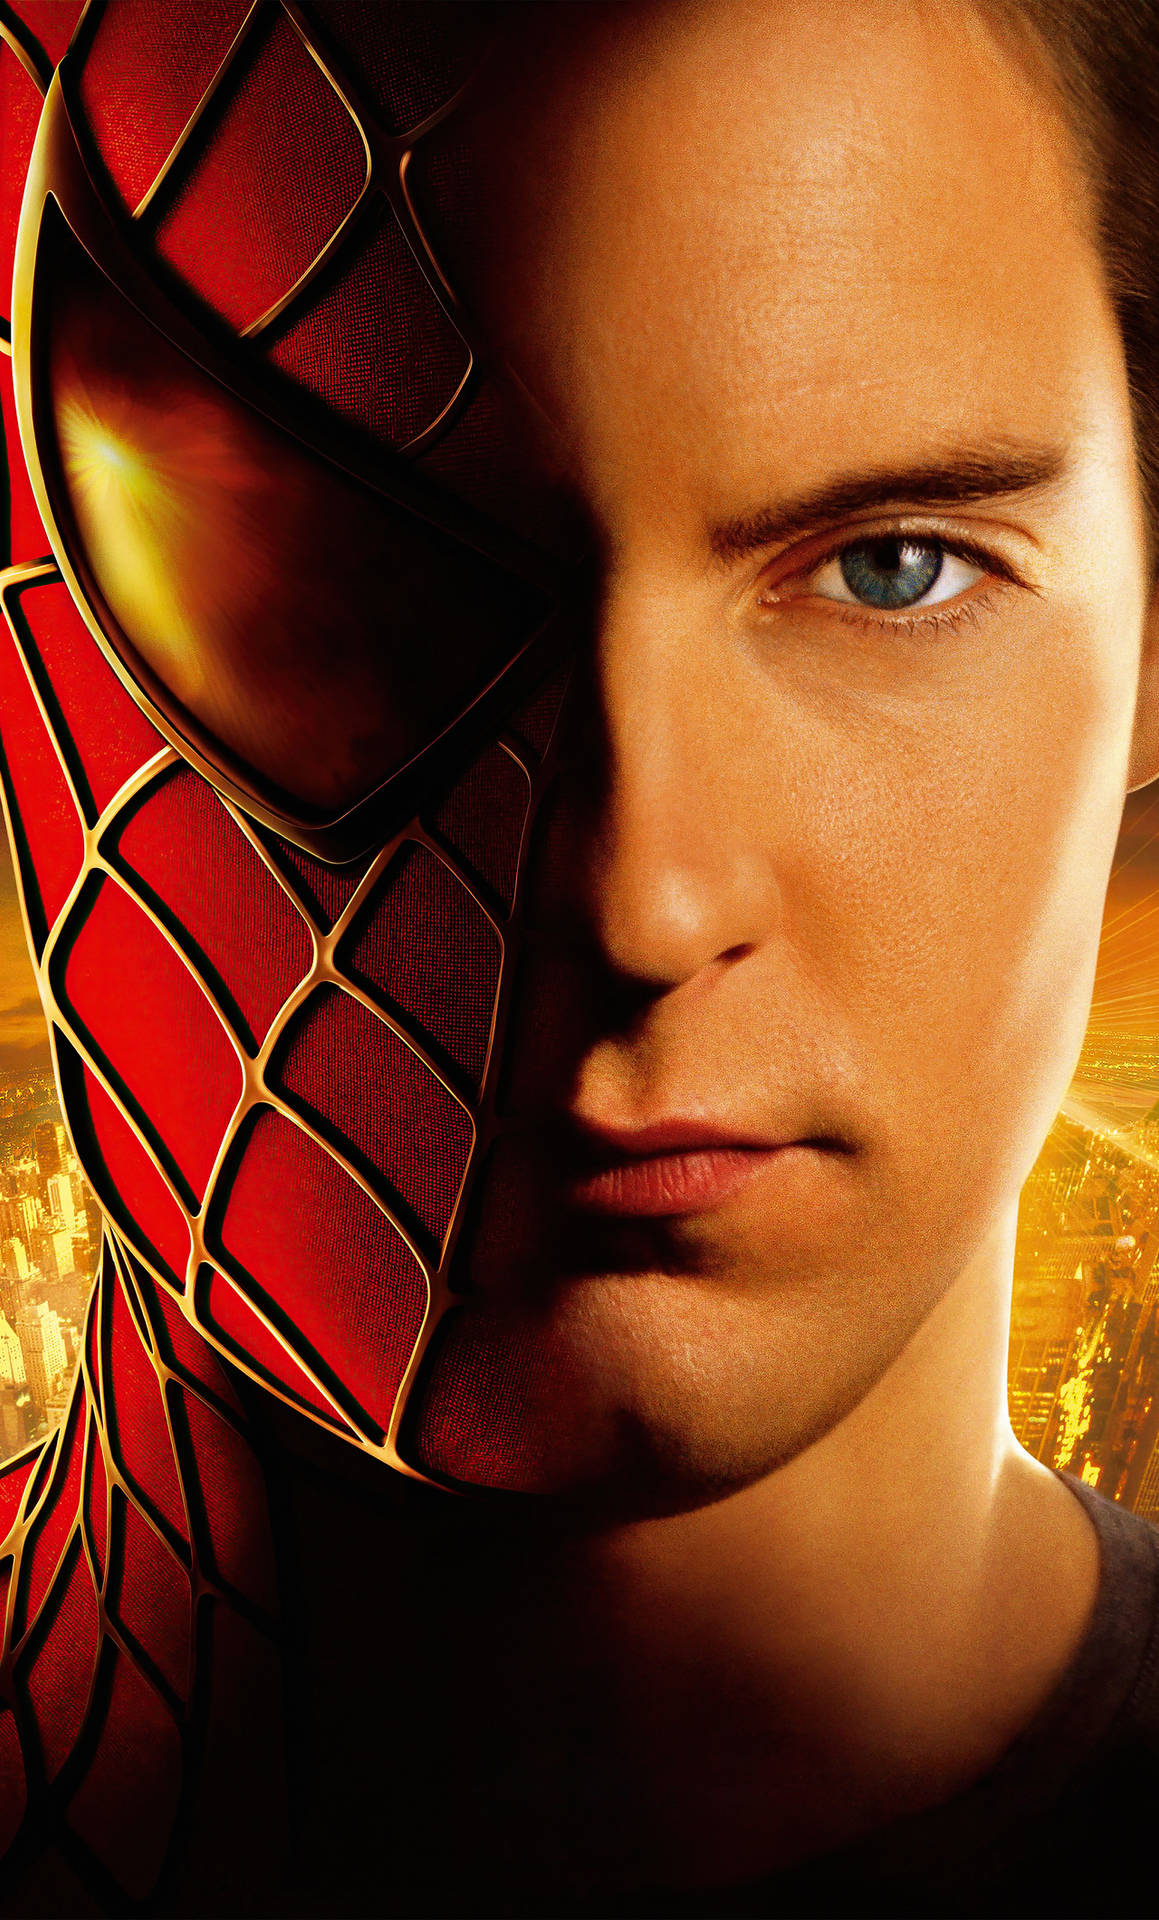 Tobey Maguire Wearing Half Spider-Man Mask Wallpaper